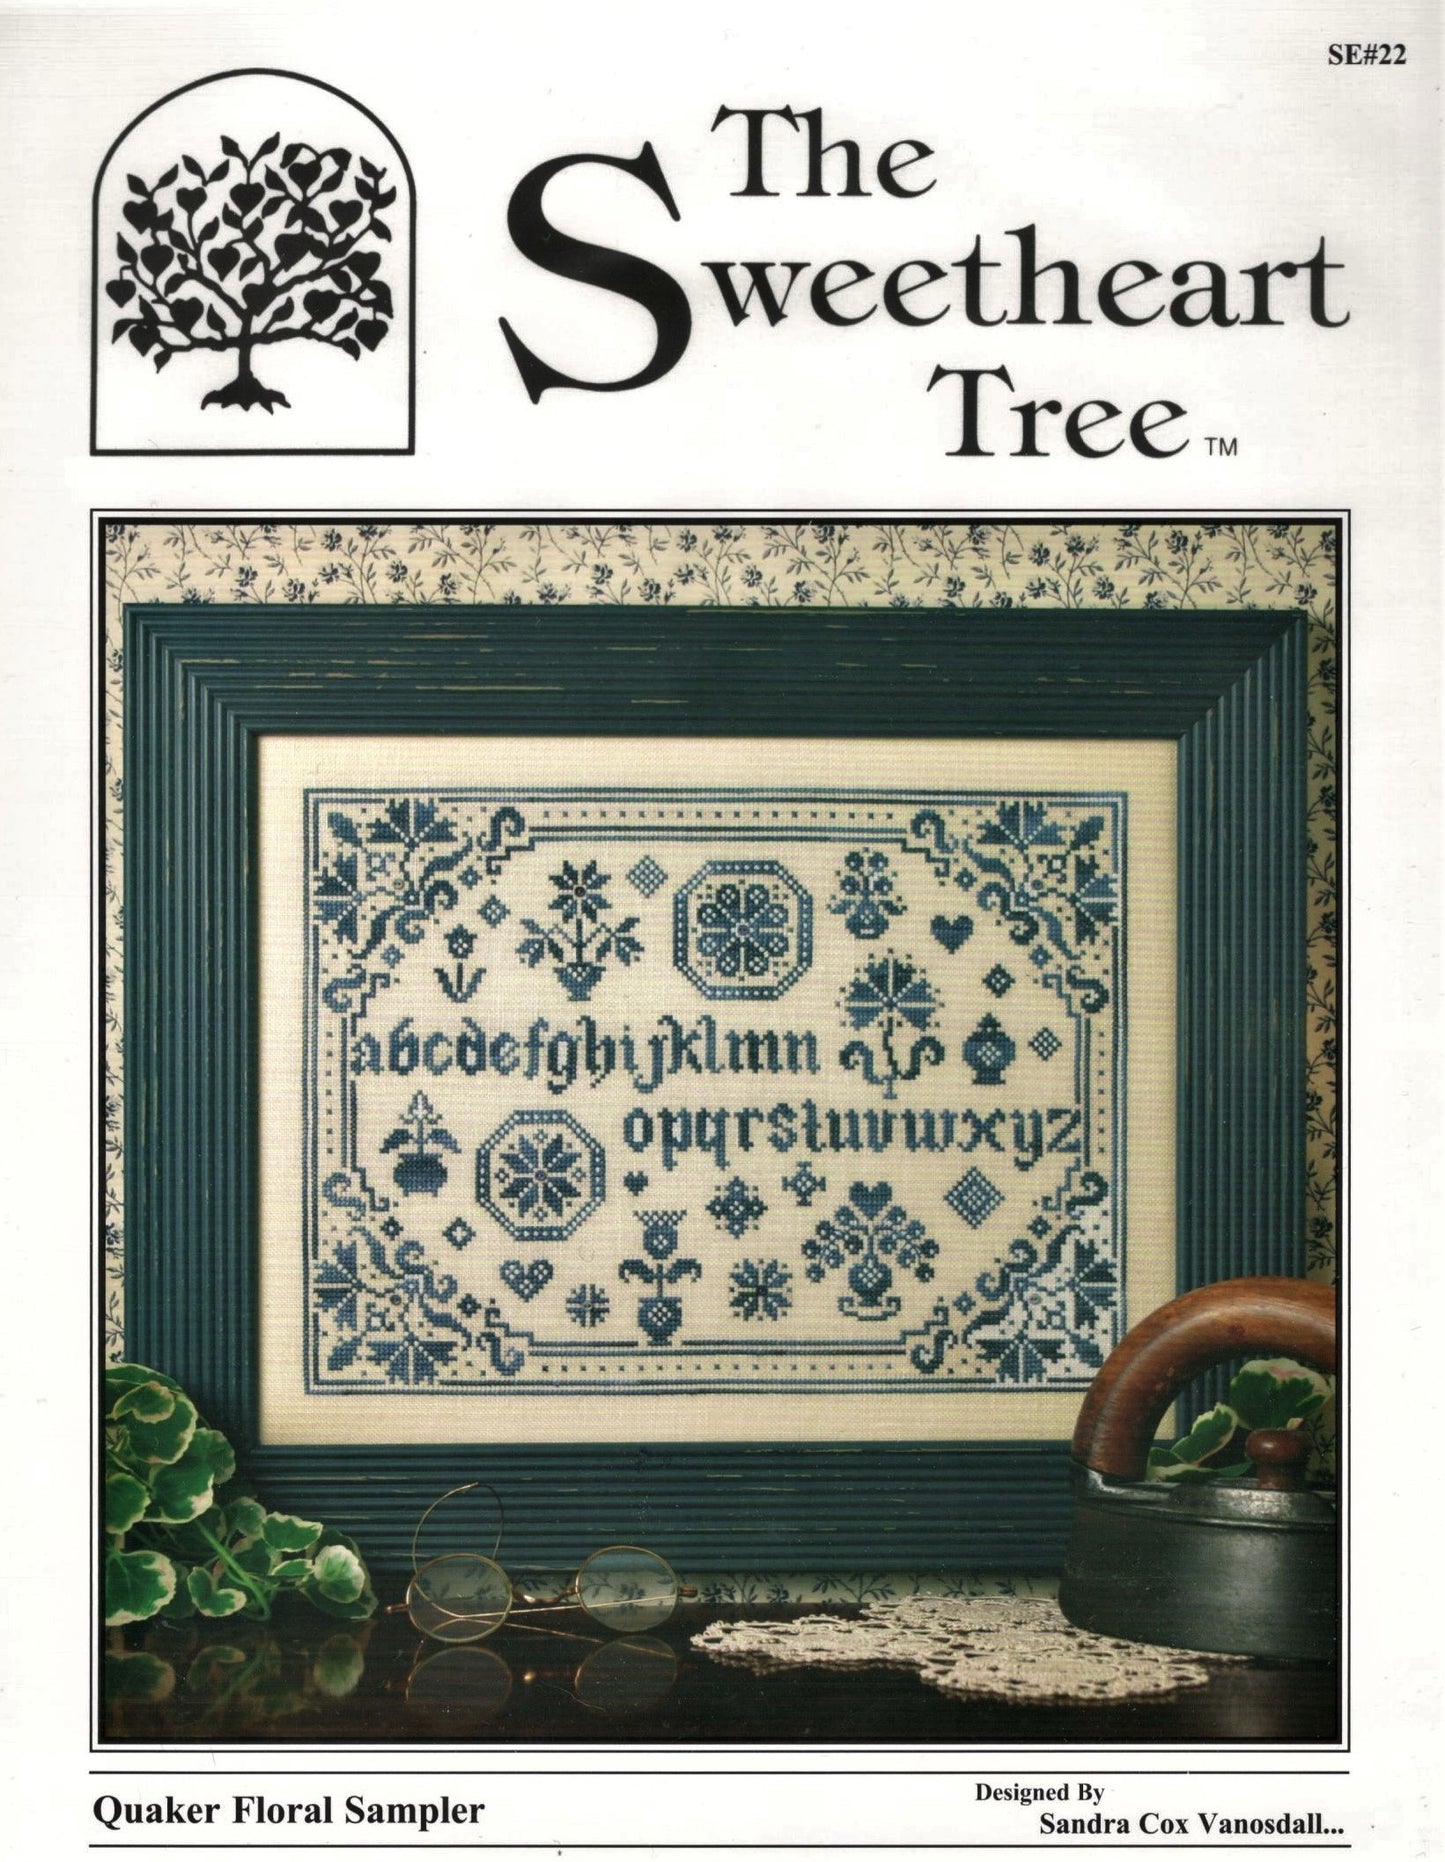 Sweetheart Tree Quaker Floral Sampler cross stitch pattern SE#22